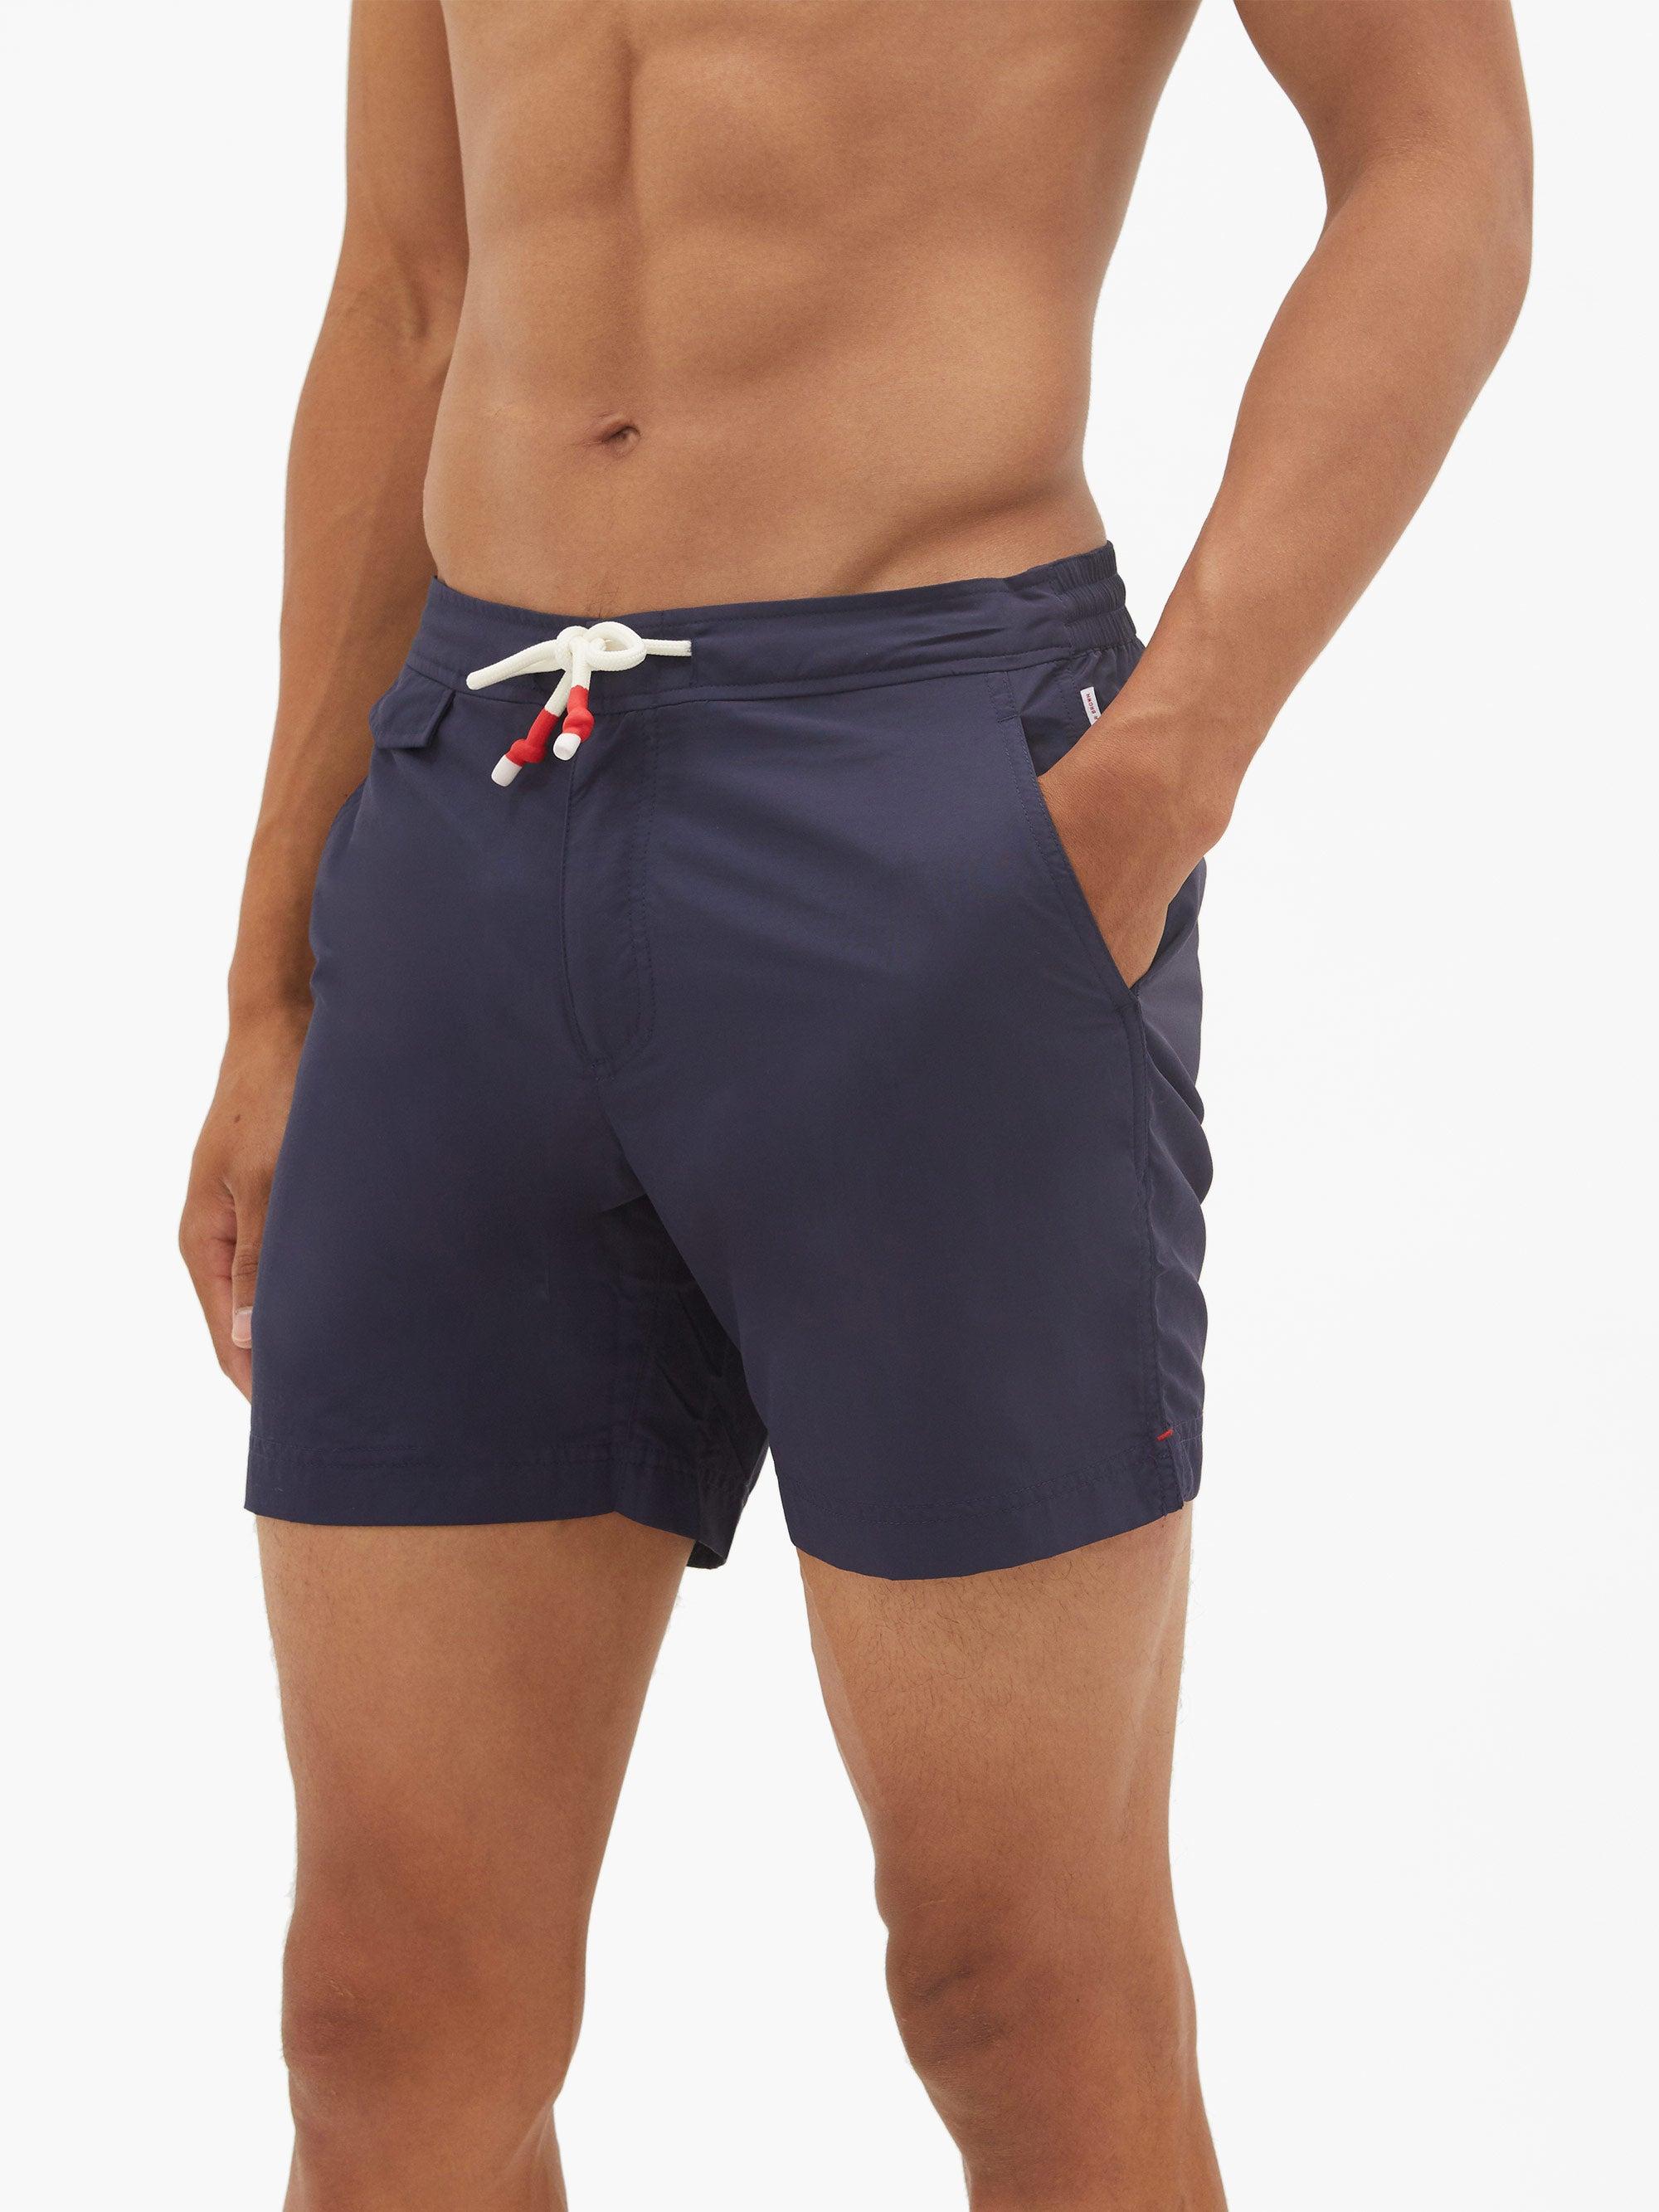 Orlebar Brown Rubber Standard Swim Shorts in Navy (Blue) for Men - Lyst